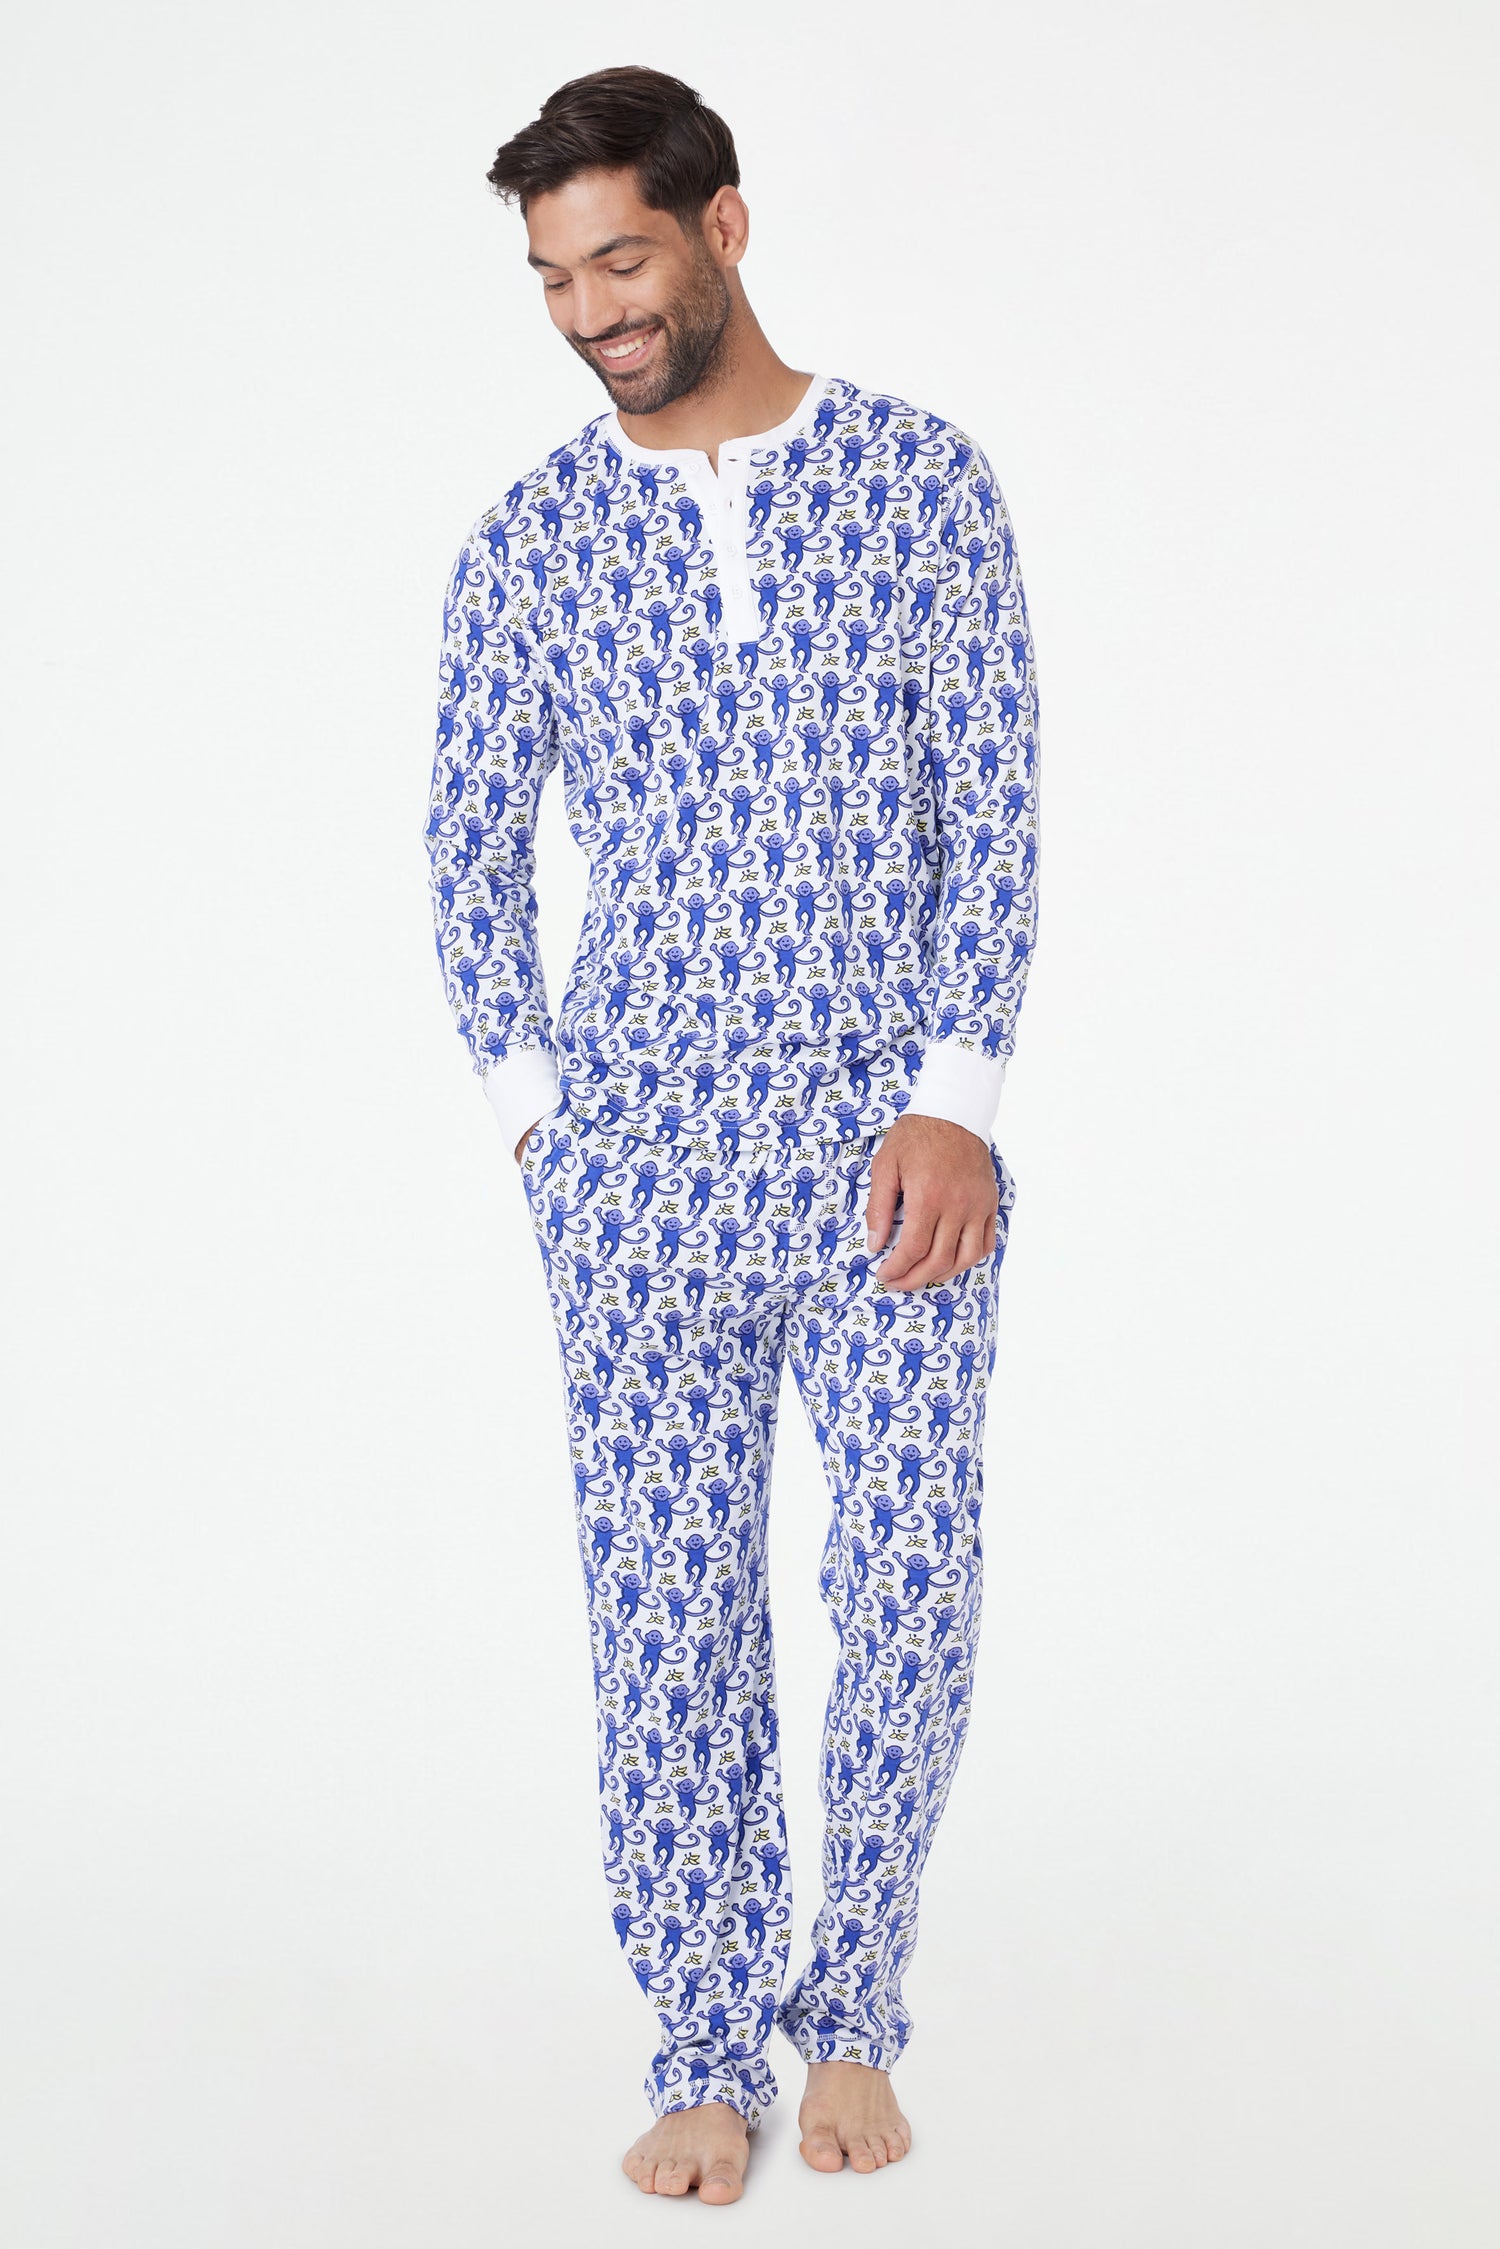 Roller Rabbit Men's Monkey Sapphire Spencer Pajamas